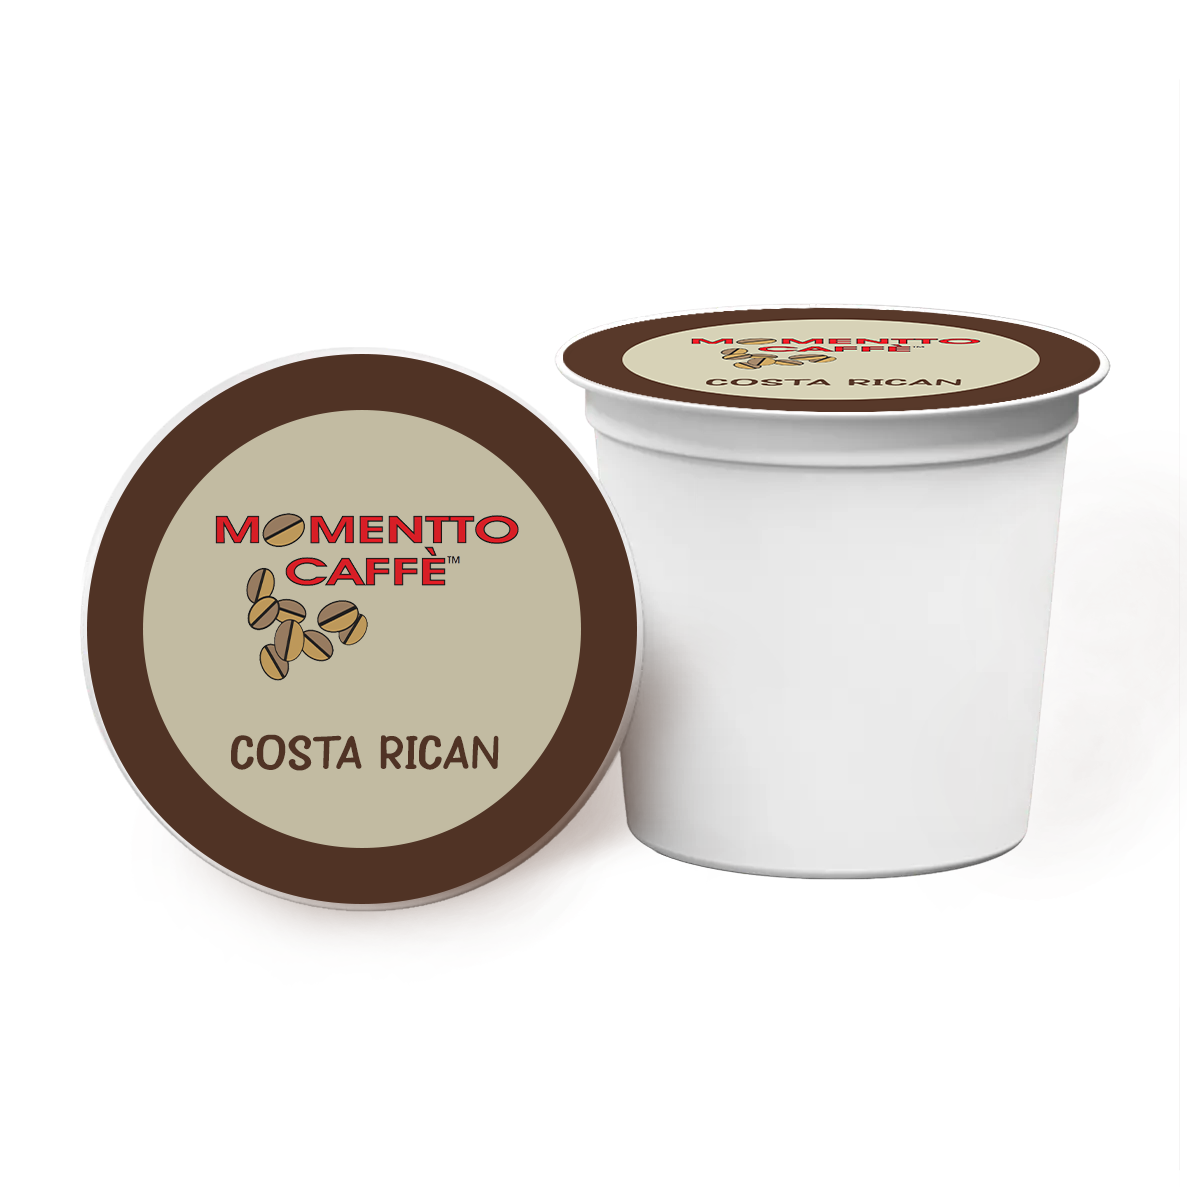 COSTA RICAN K-CUPS